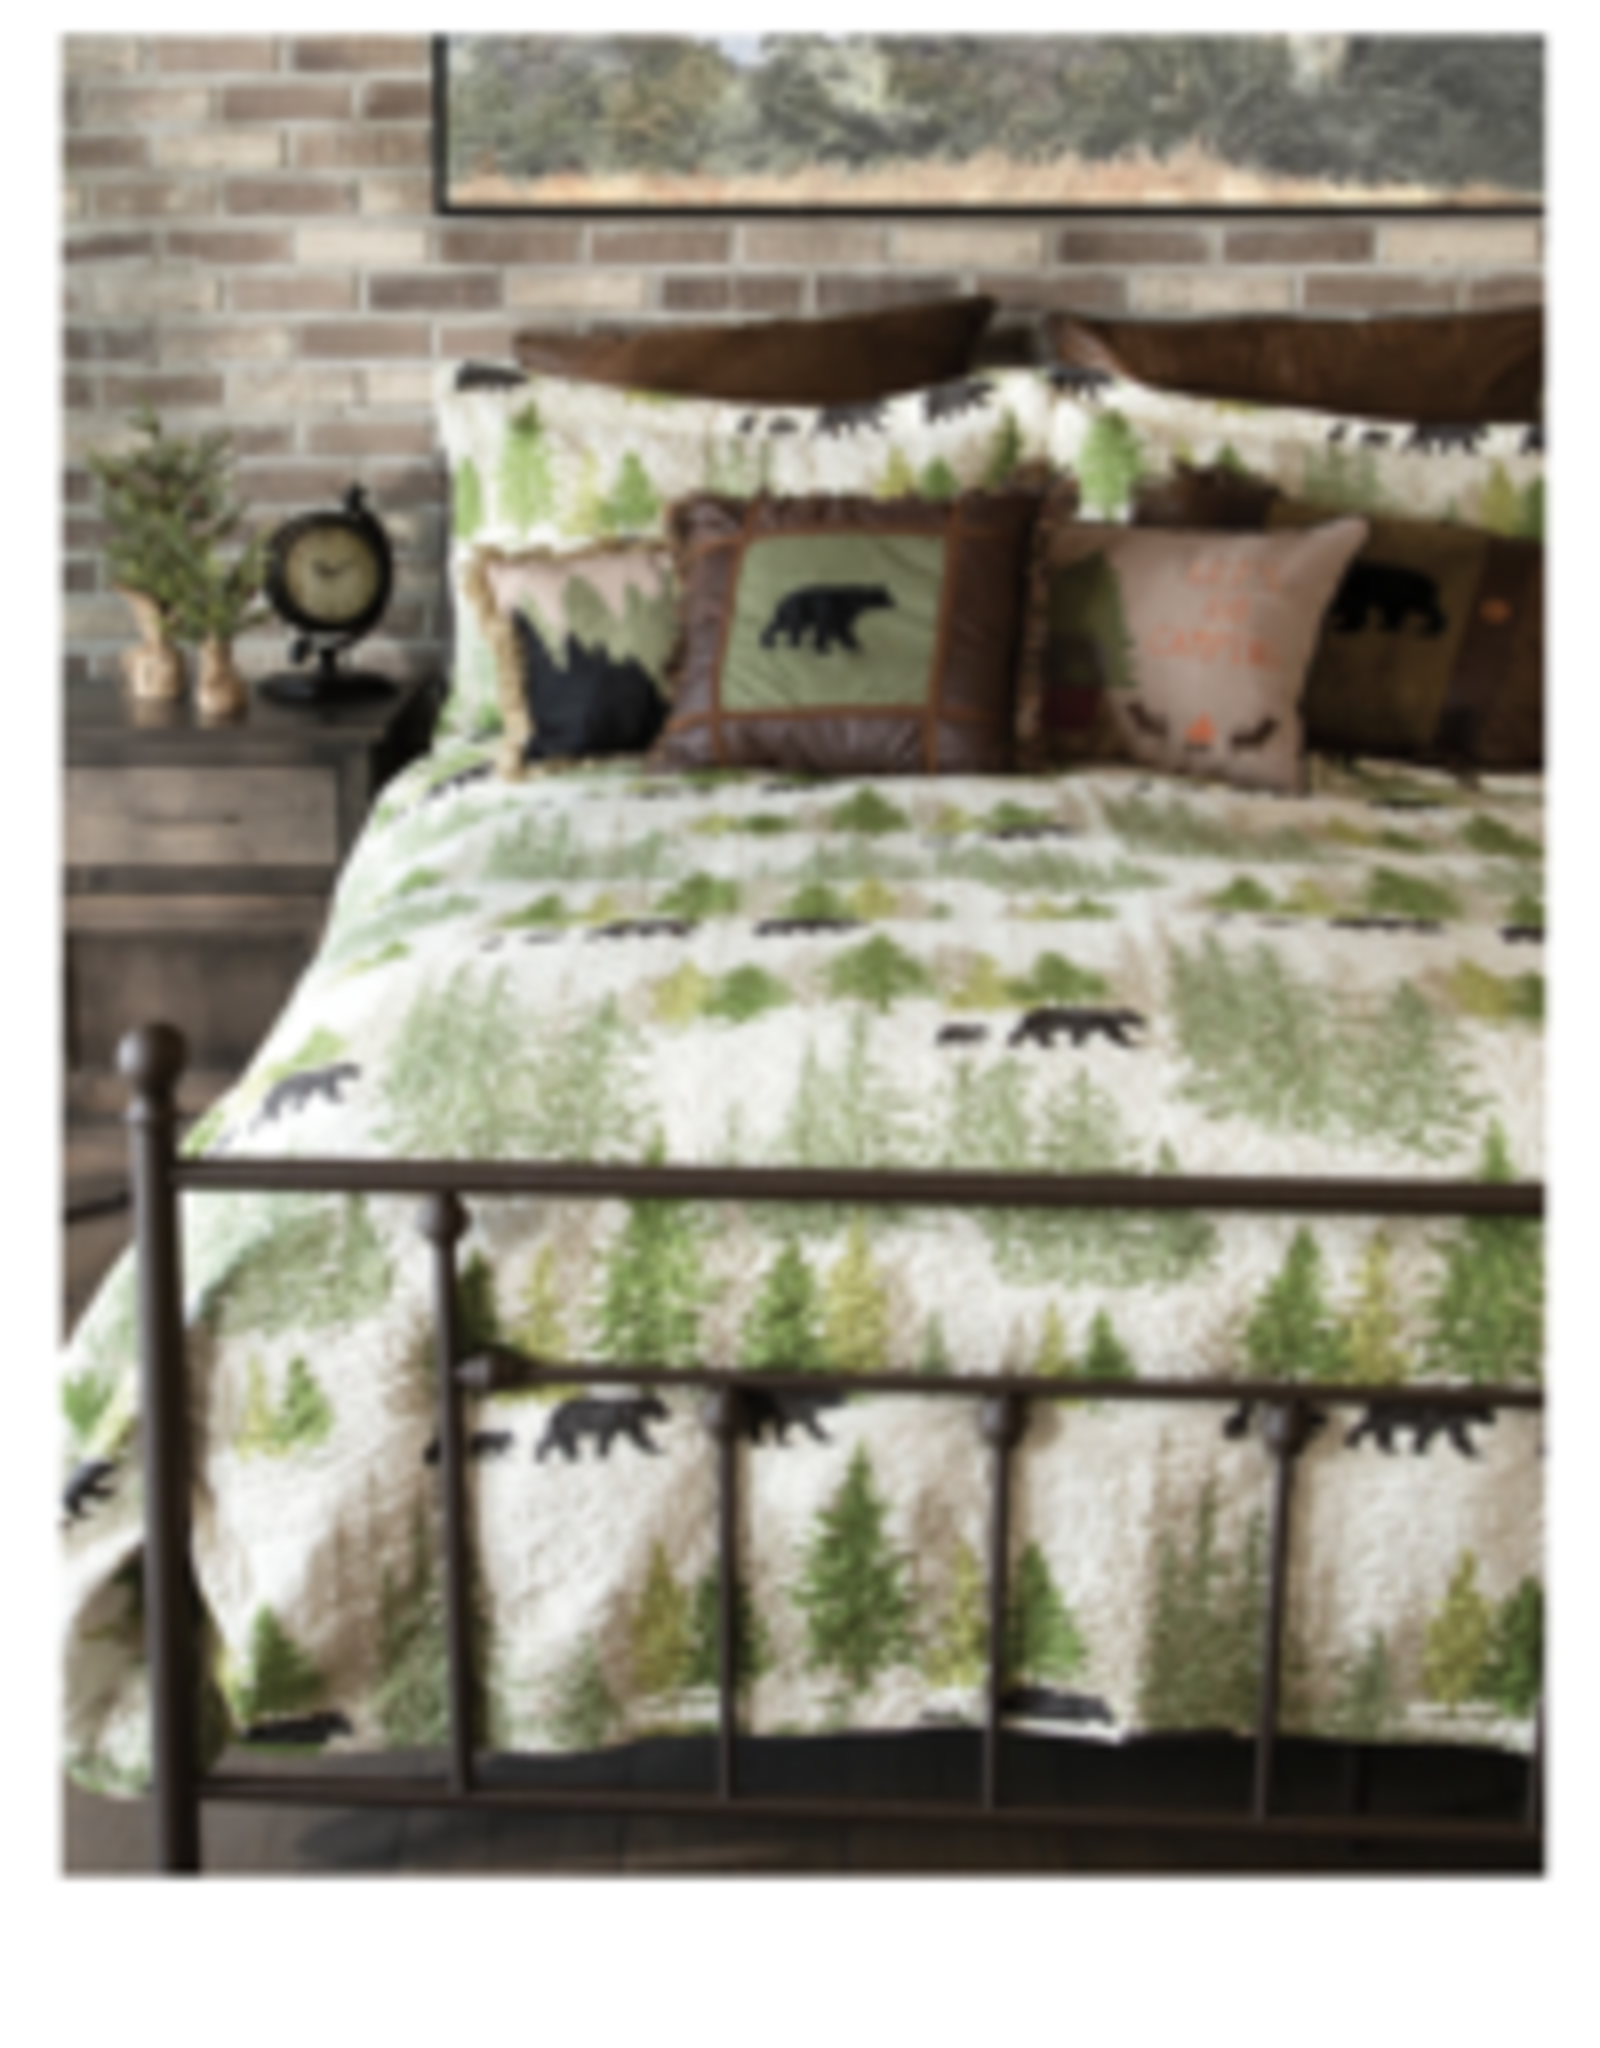 Carstens Pine Wilderness Quilt Bed Set - Twin